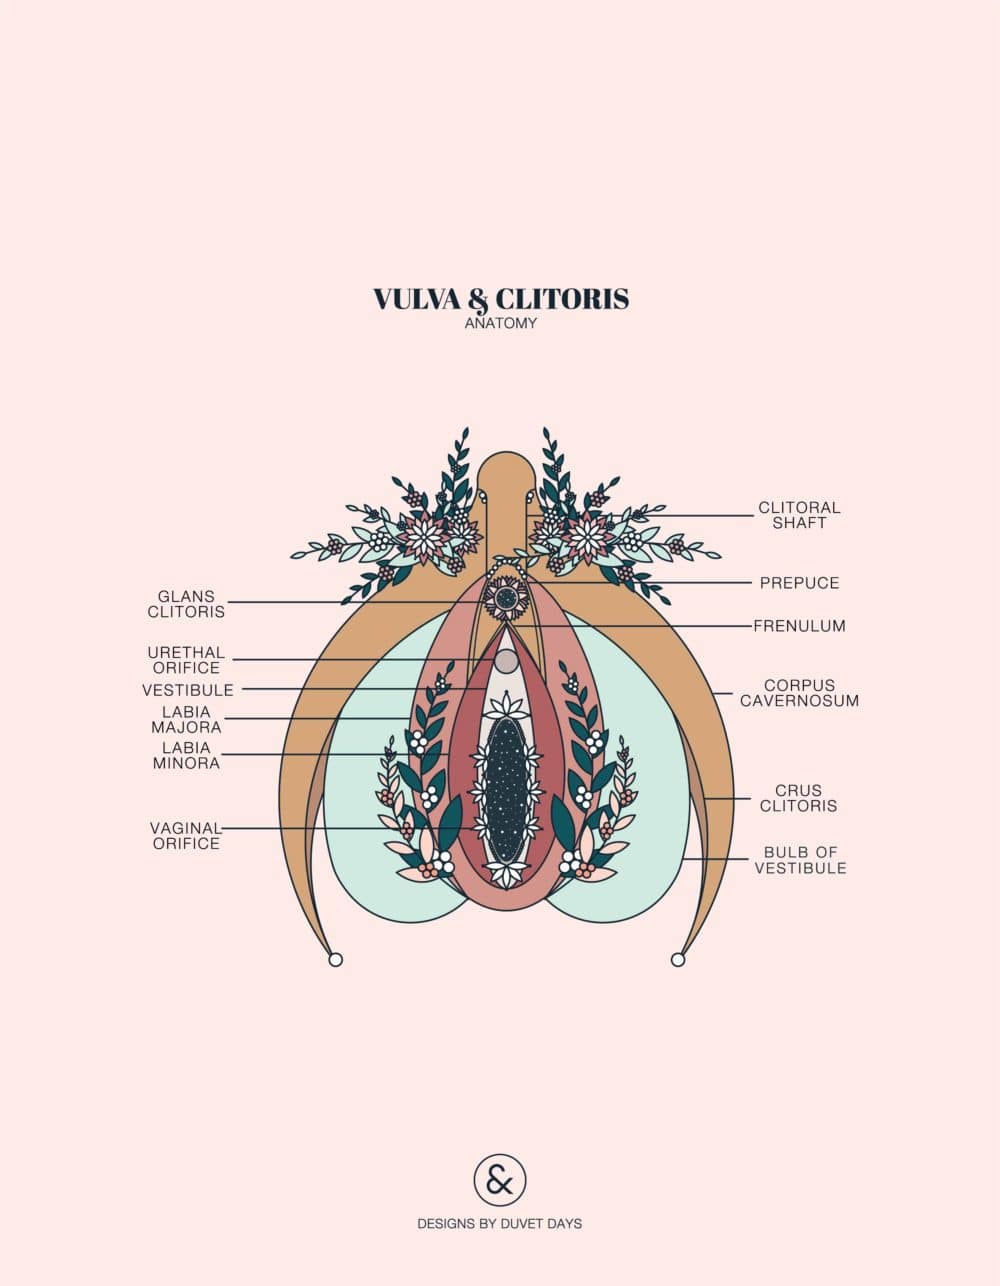 Duvet Days_Anatomy Illustrations_8.5x11_Vulva & Clitoris_Preview-01